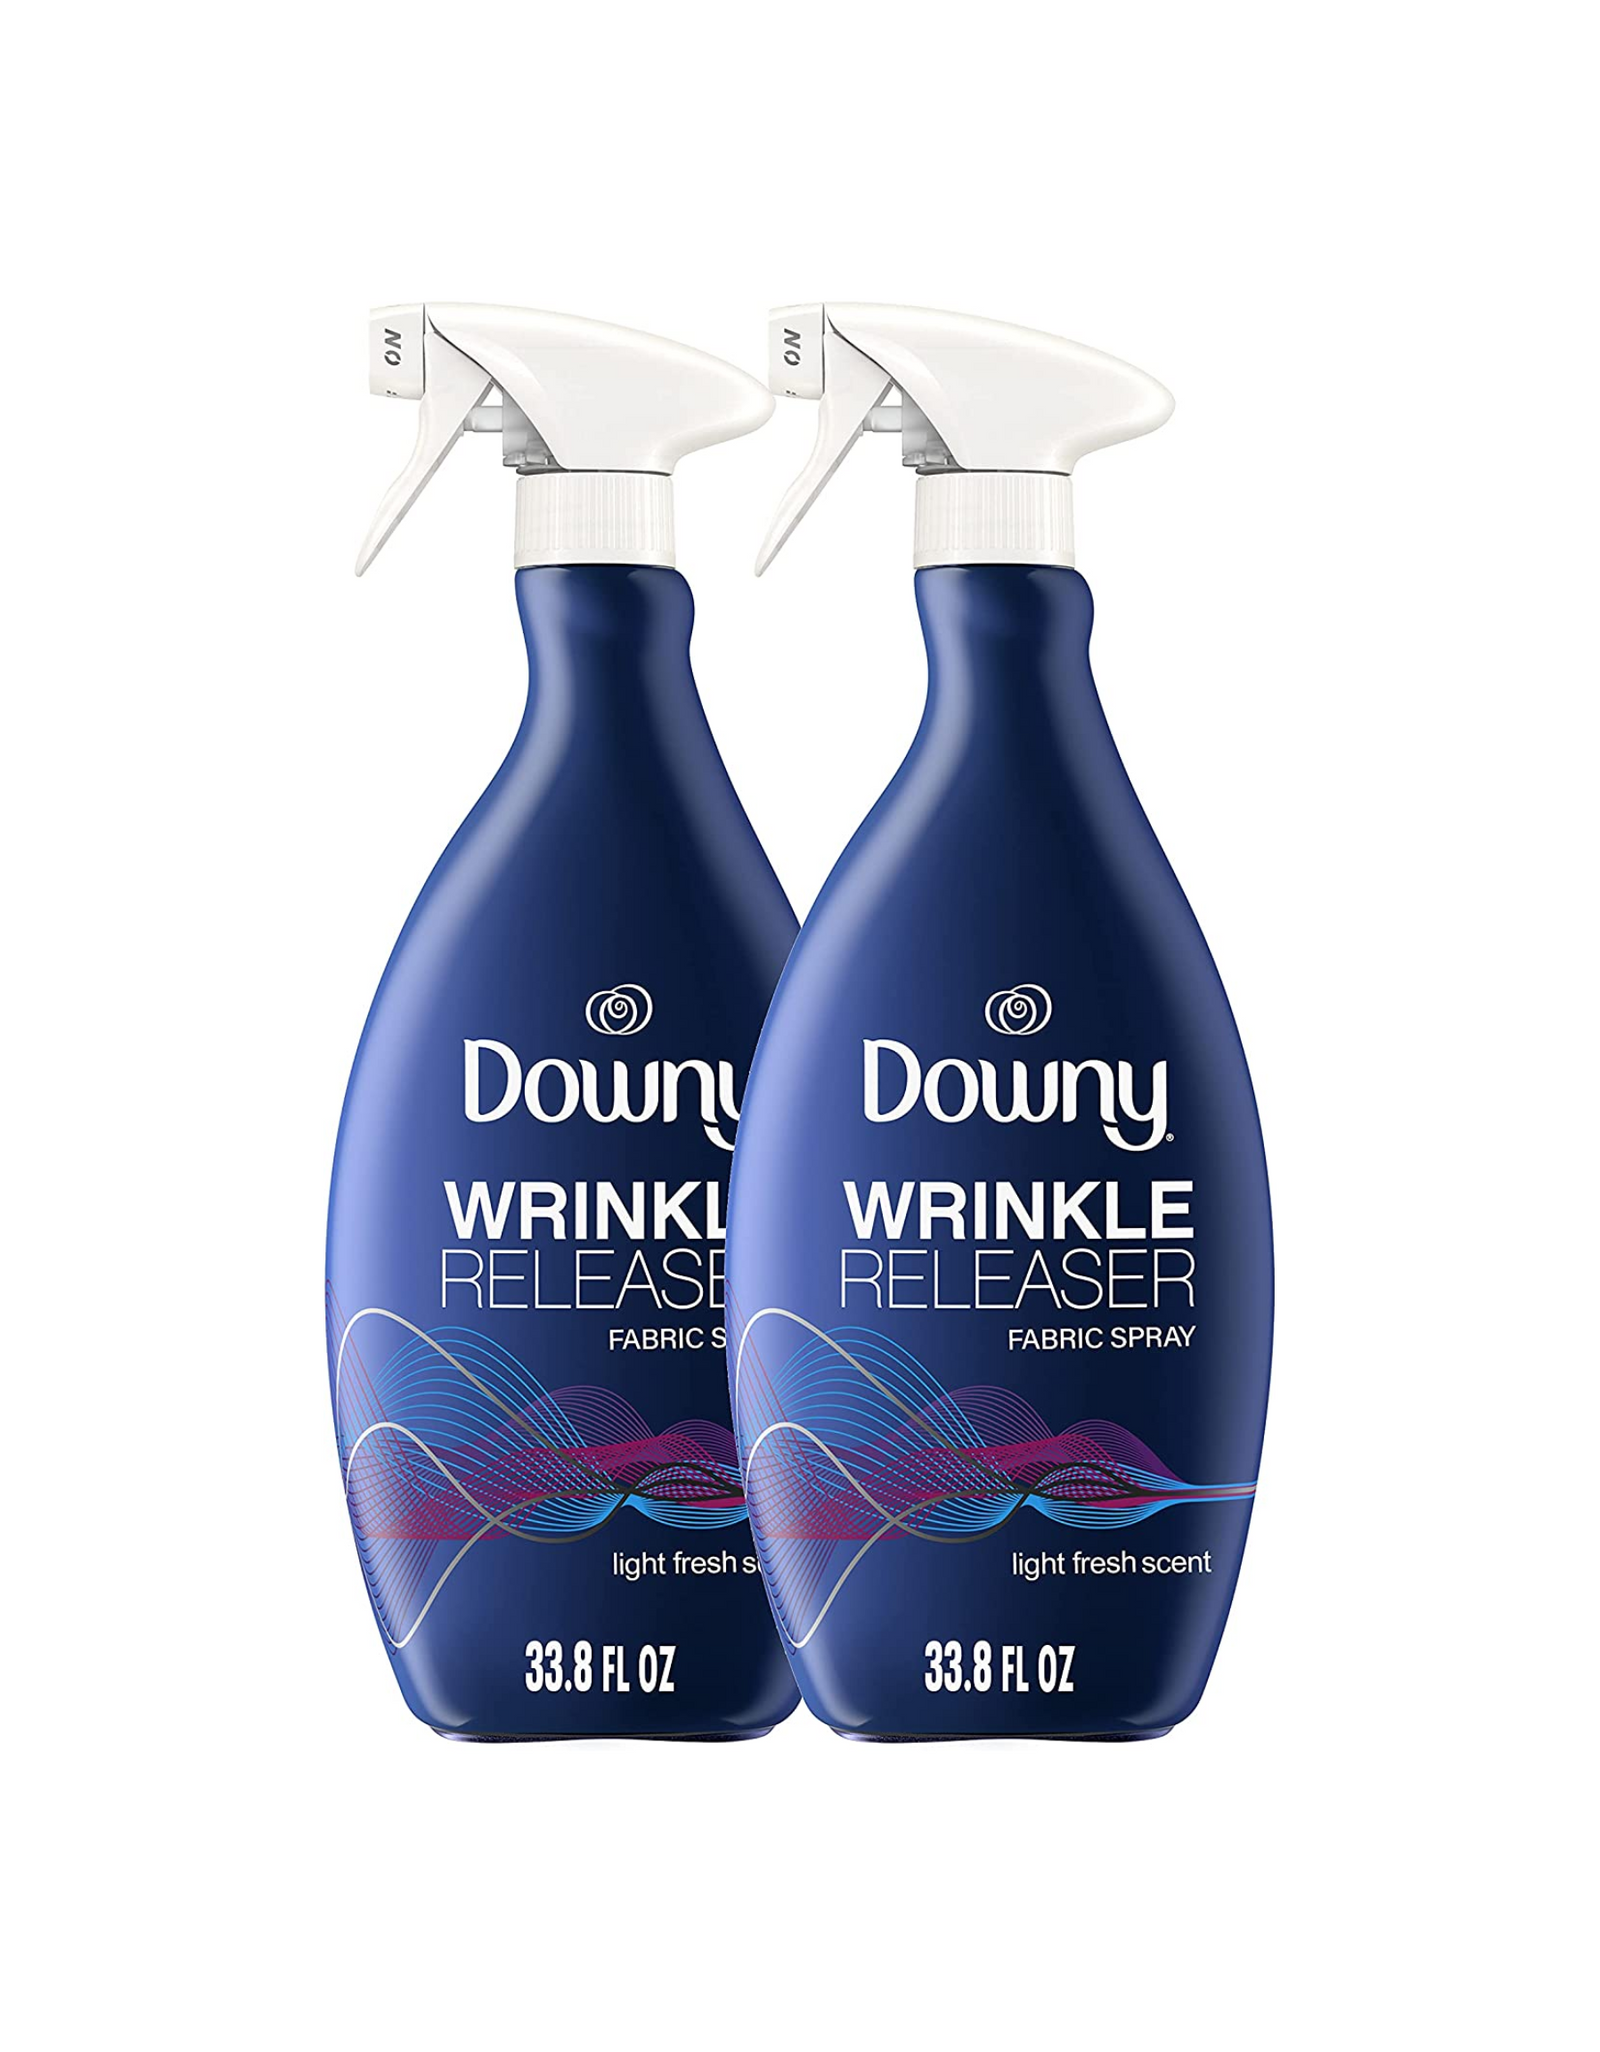 Downy Wrinkle Releaser Fabric Spray, Light Fresh Scent, 33.8 oz each (Pack of 2)